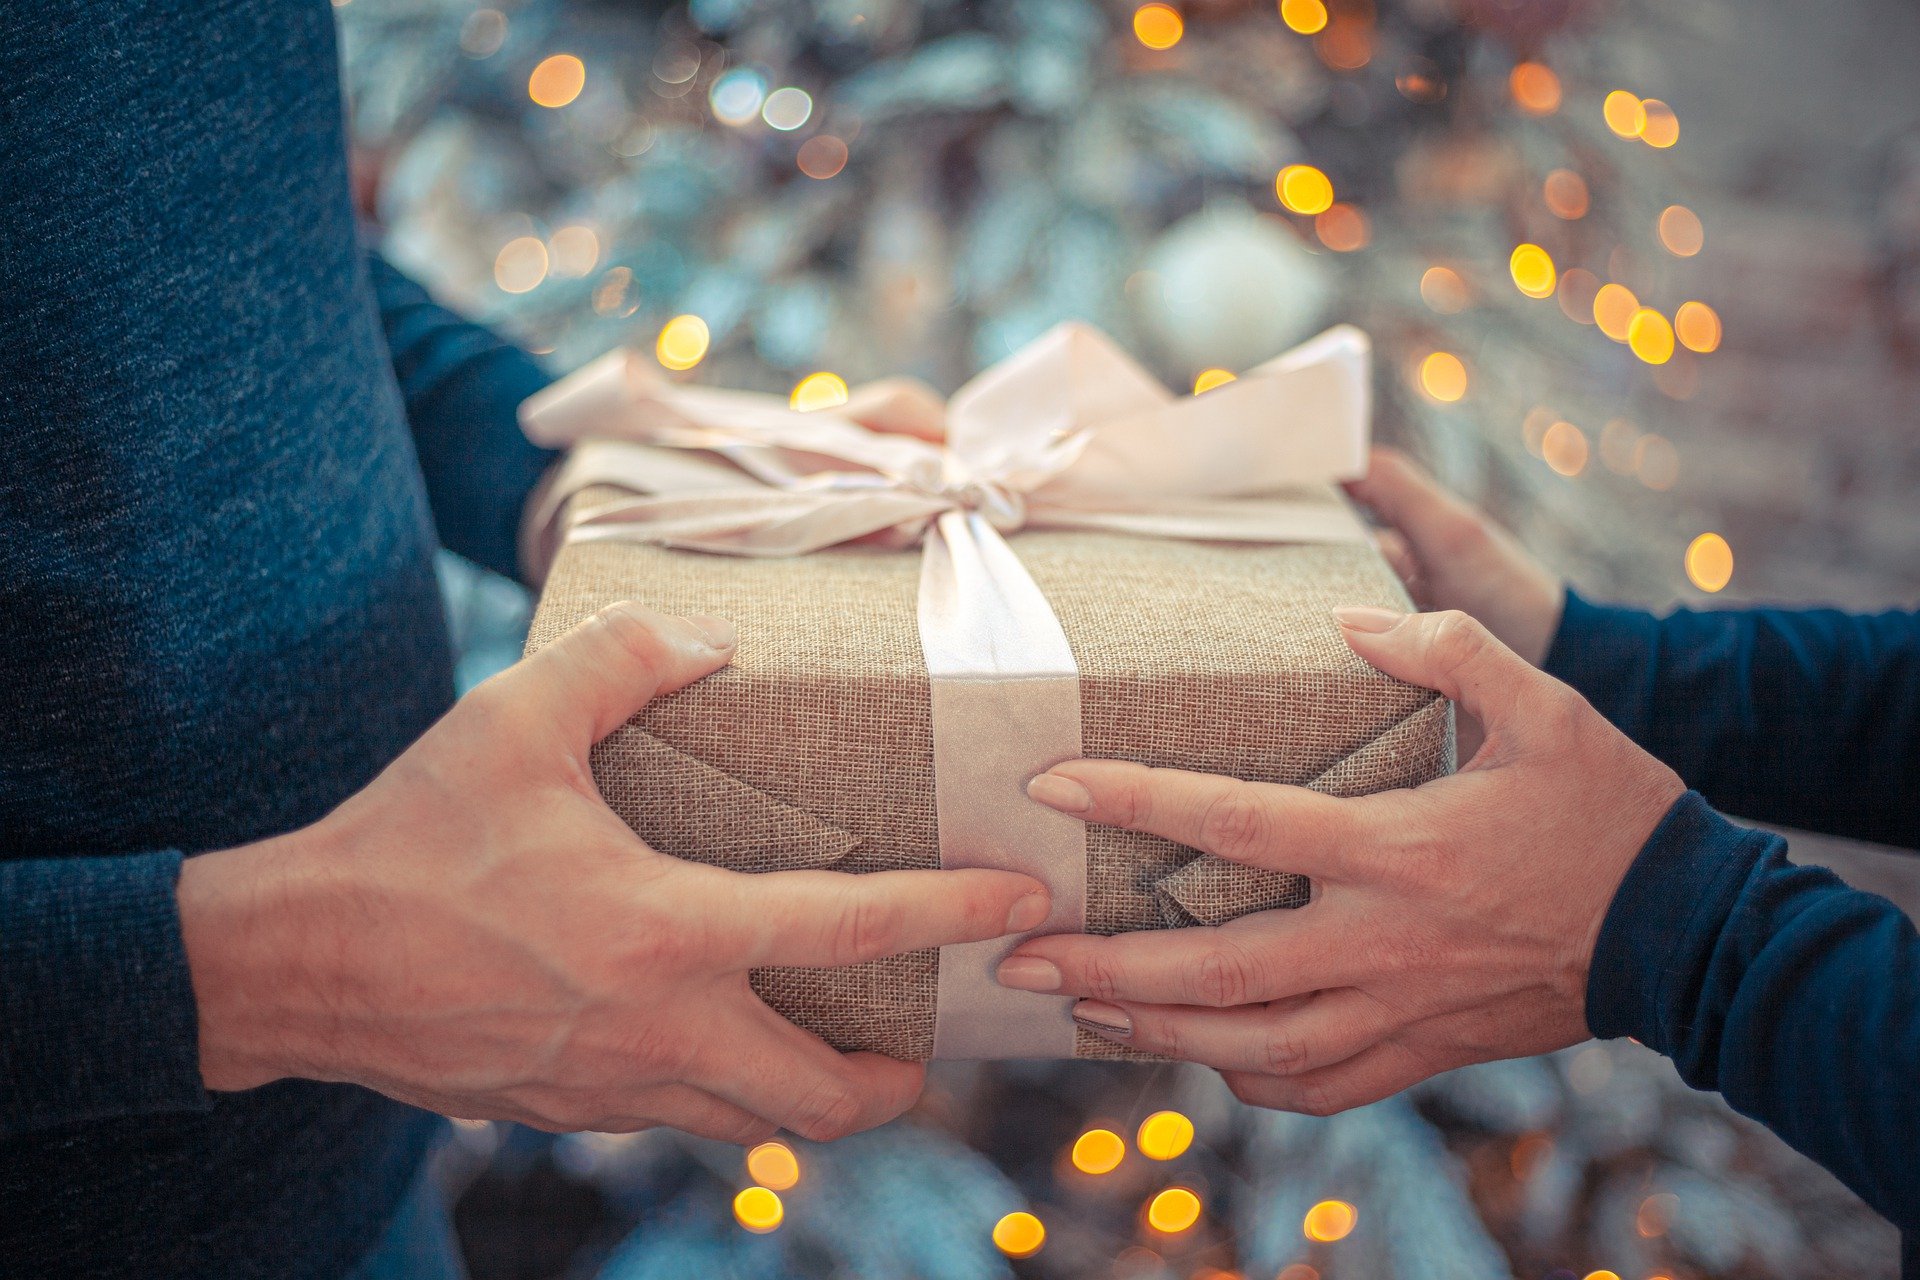 Por que trocamos presentes no Natal? – Forever Young